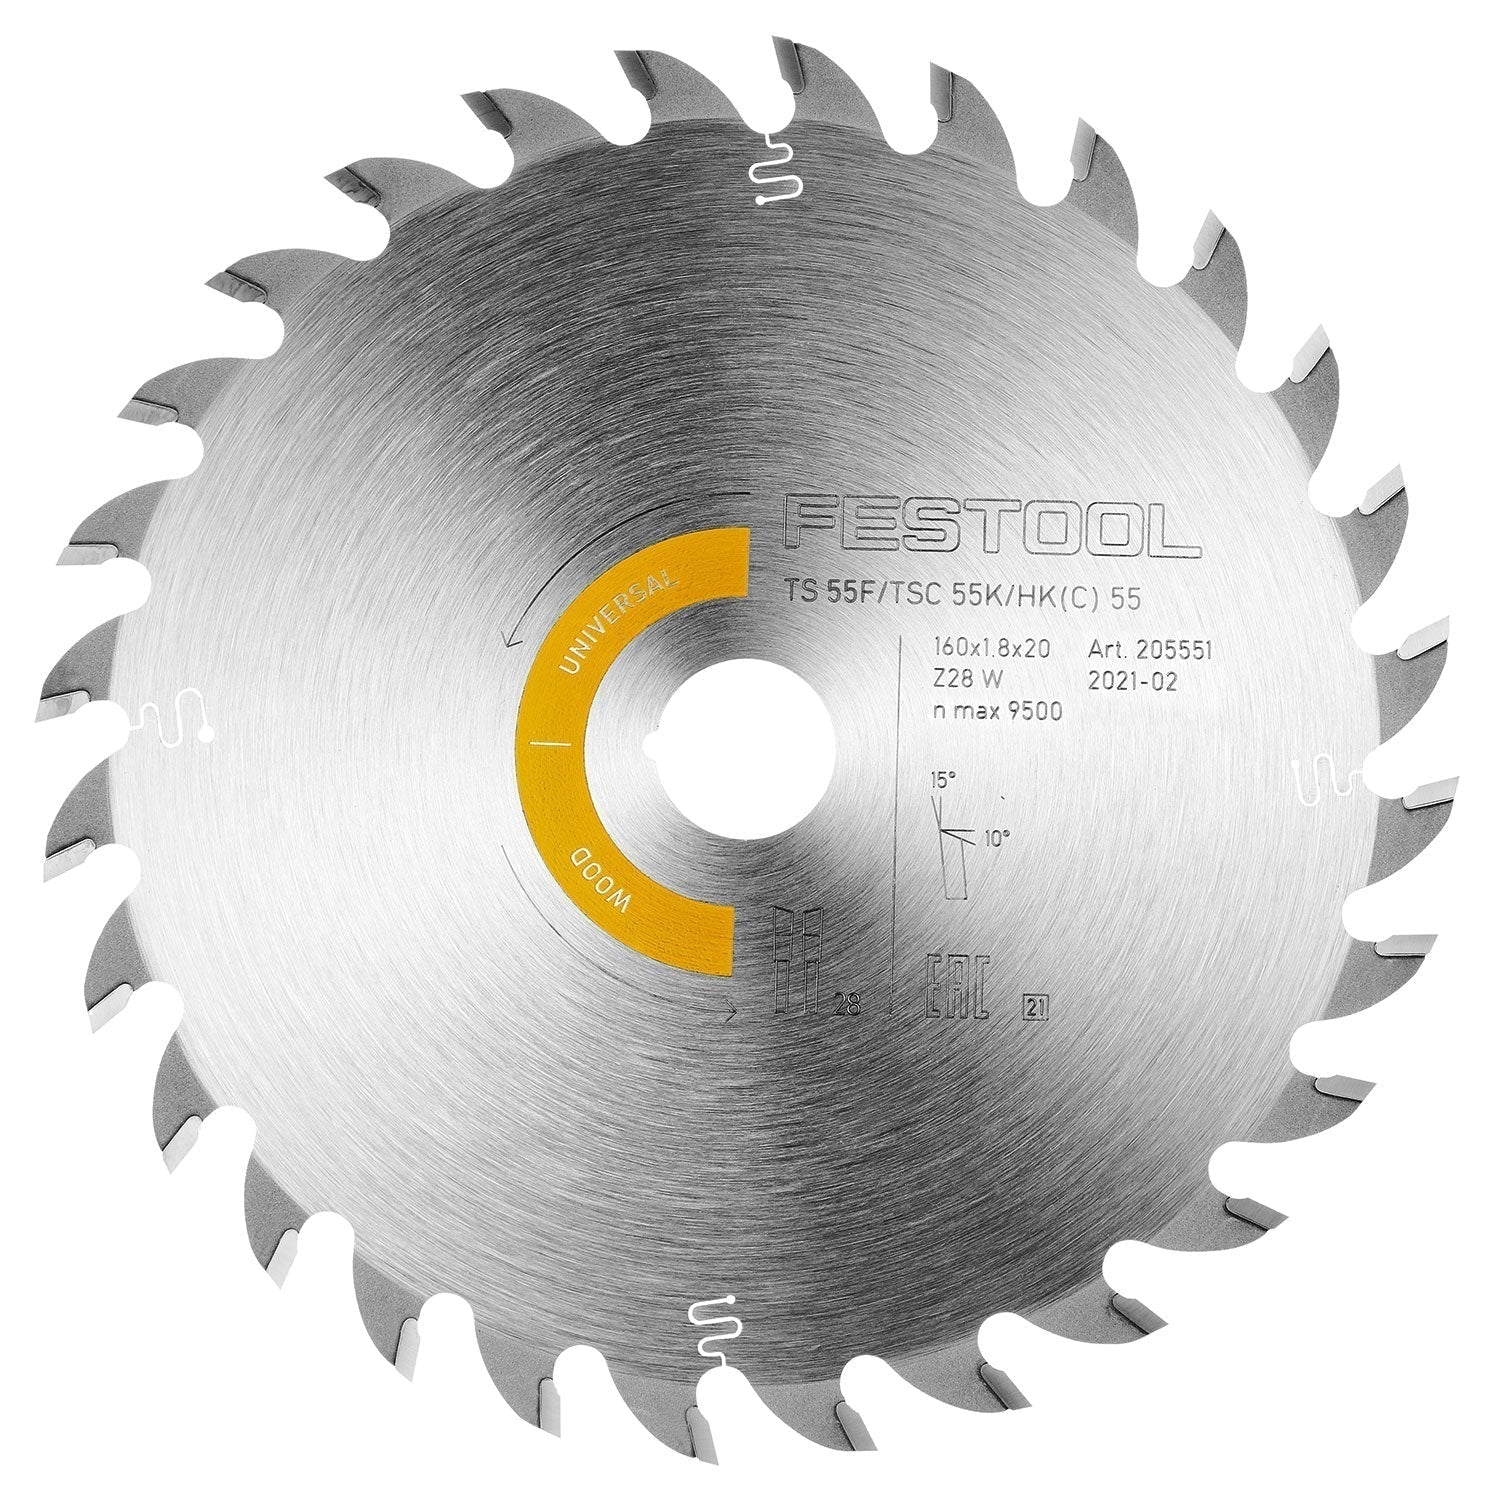 Festool Saw blade Wood Universal HW 160x1,8x20 W 28 205551 Power Tool Services